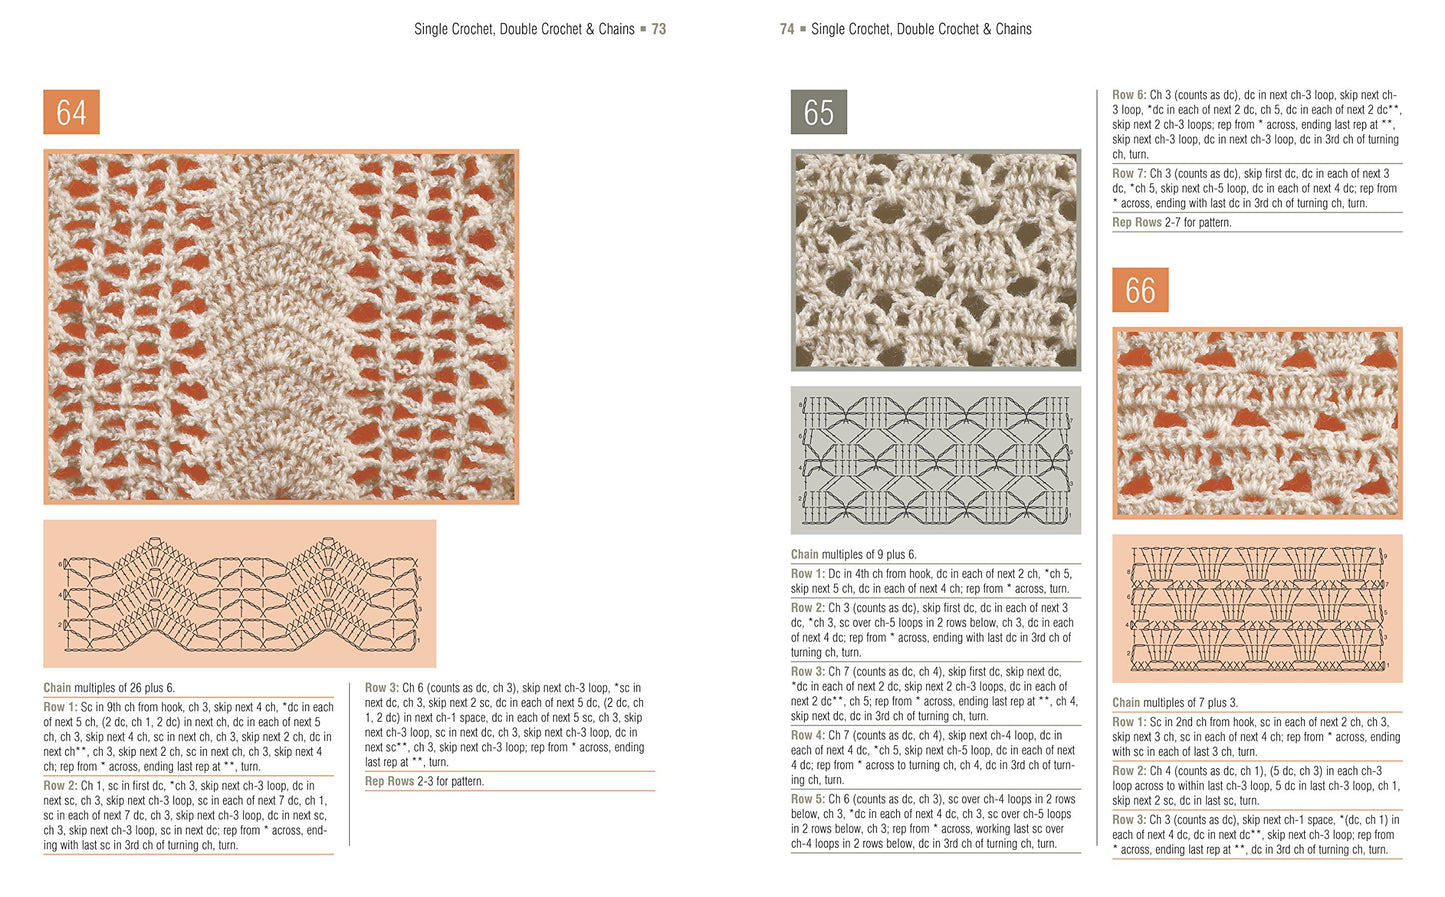 The Complete Book of Crochet Stitch Designs: 500 Classic & Original Patterns Volume 1 (Revised) (Complete Crochet Designs #1)